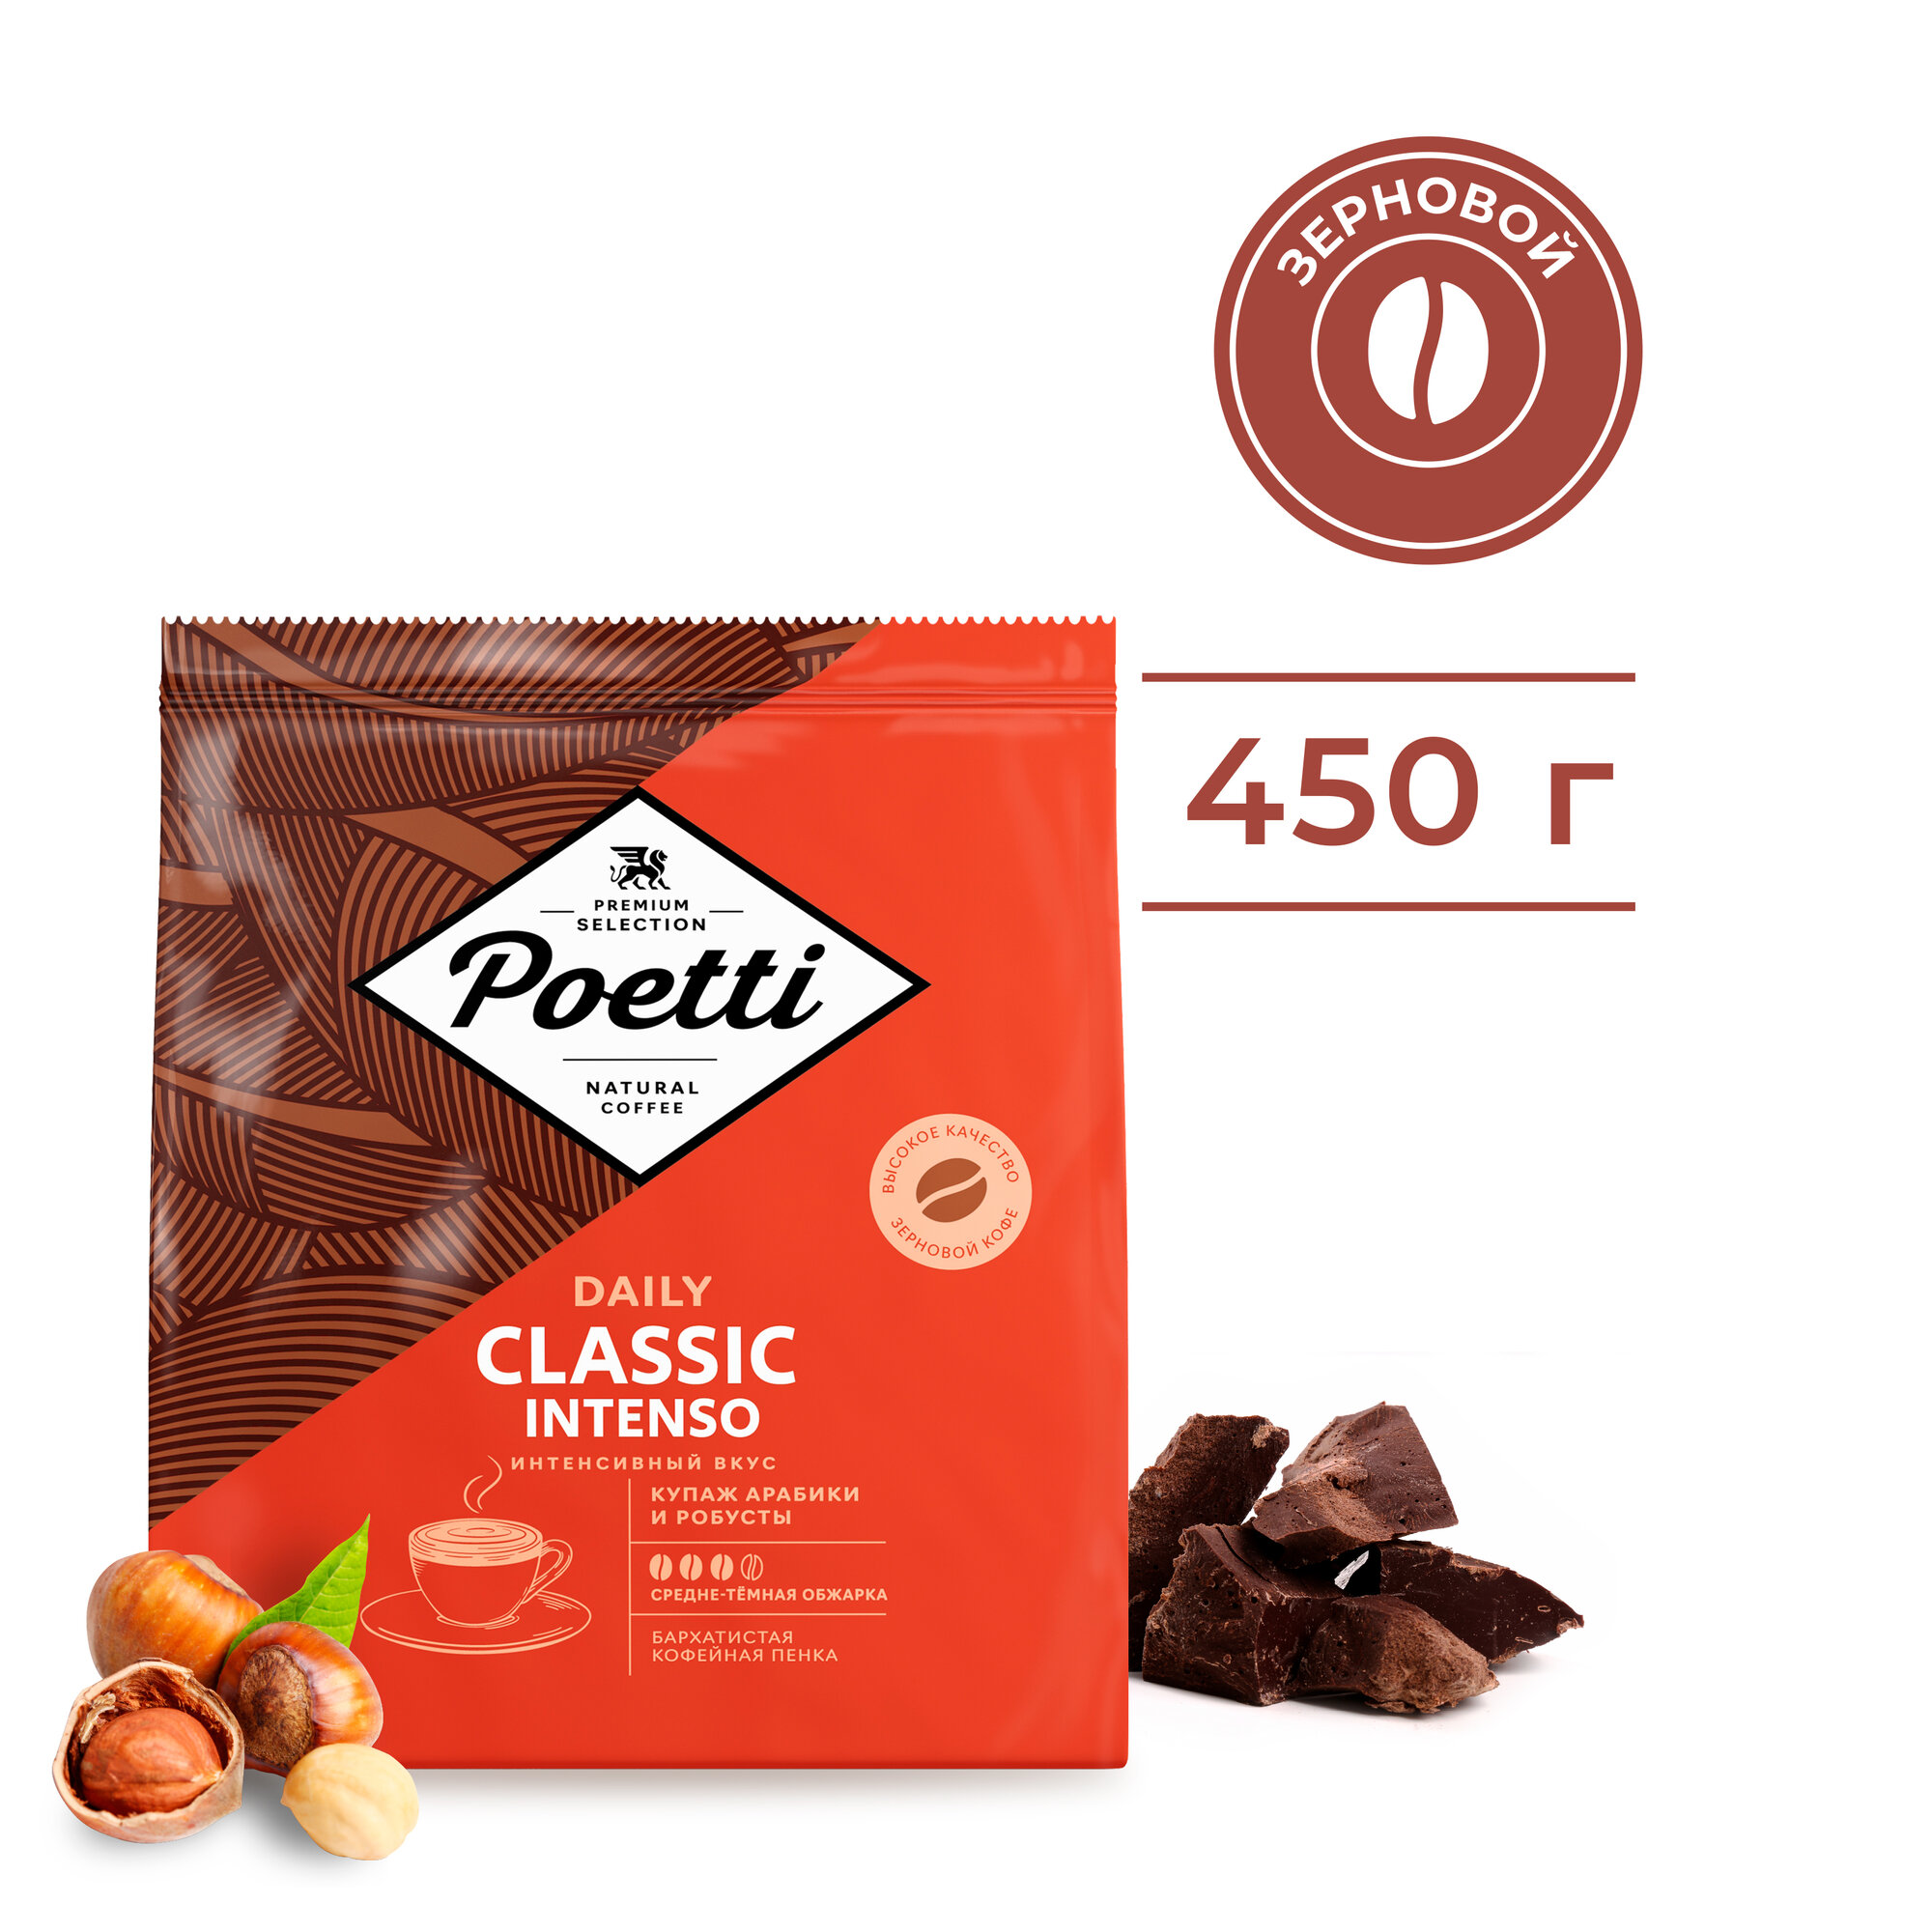 Кофе в зернах Poetti Daily Classic Intenso, 450 г